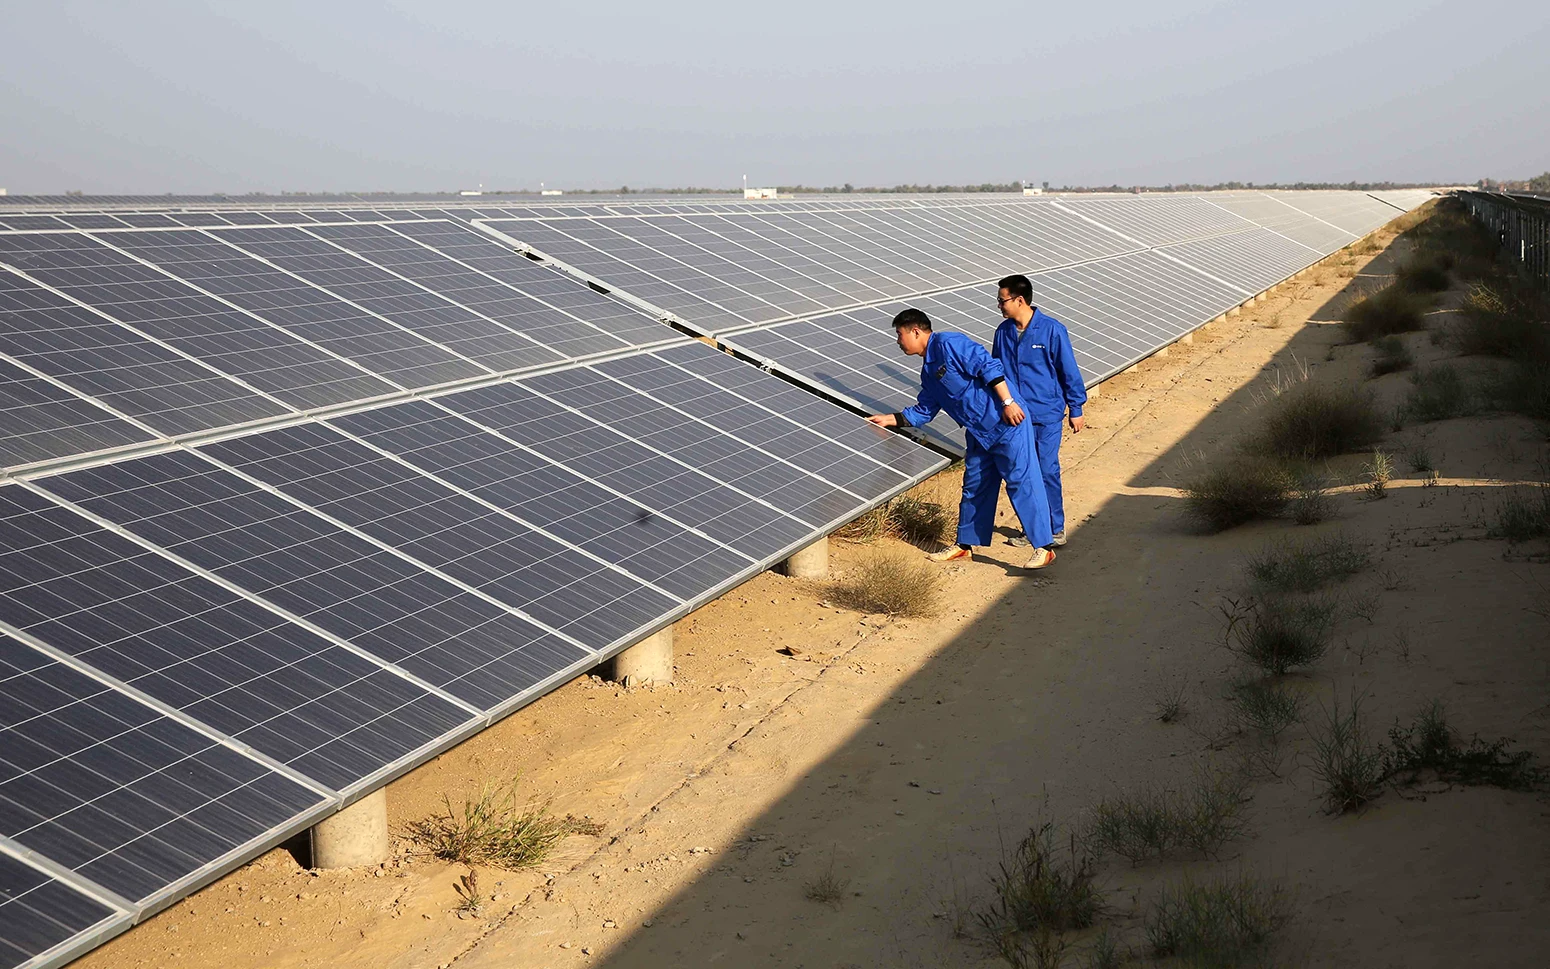 Technicians check the solar power panels in Bahawalpur, Pakistan.